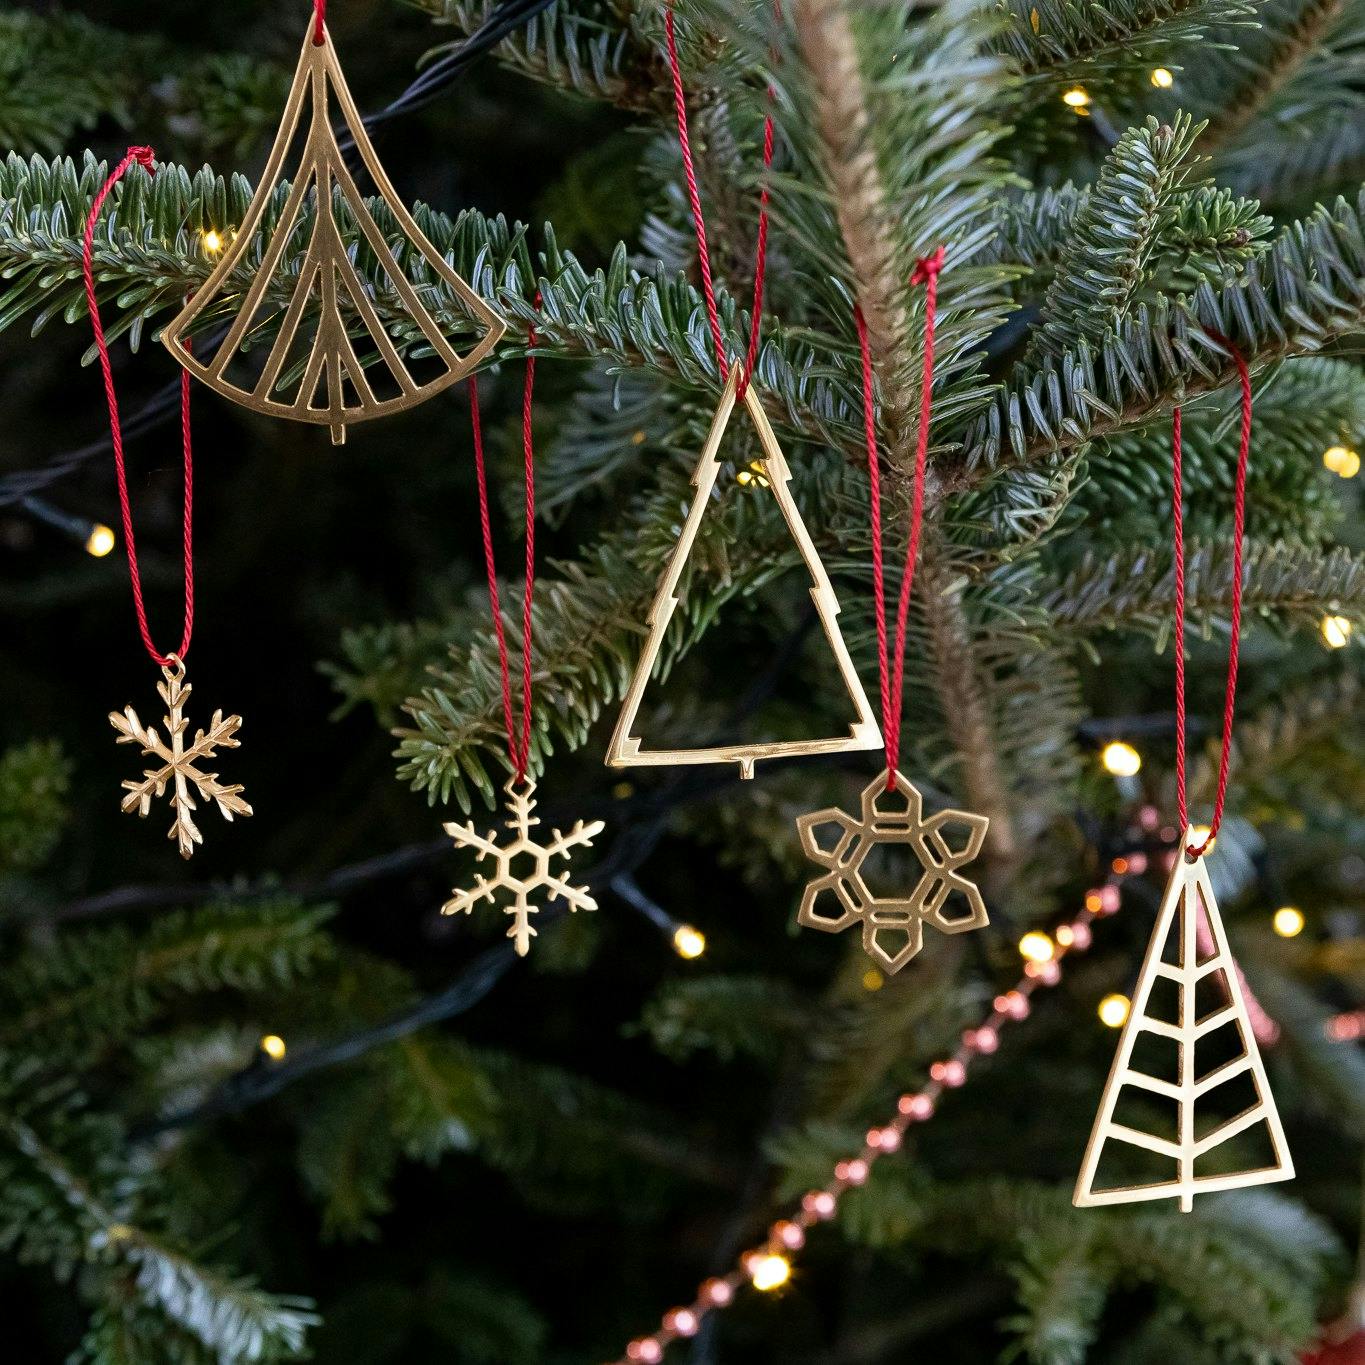 24K Gold Luxury Christmas Ornaments